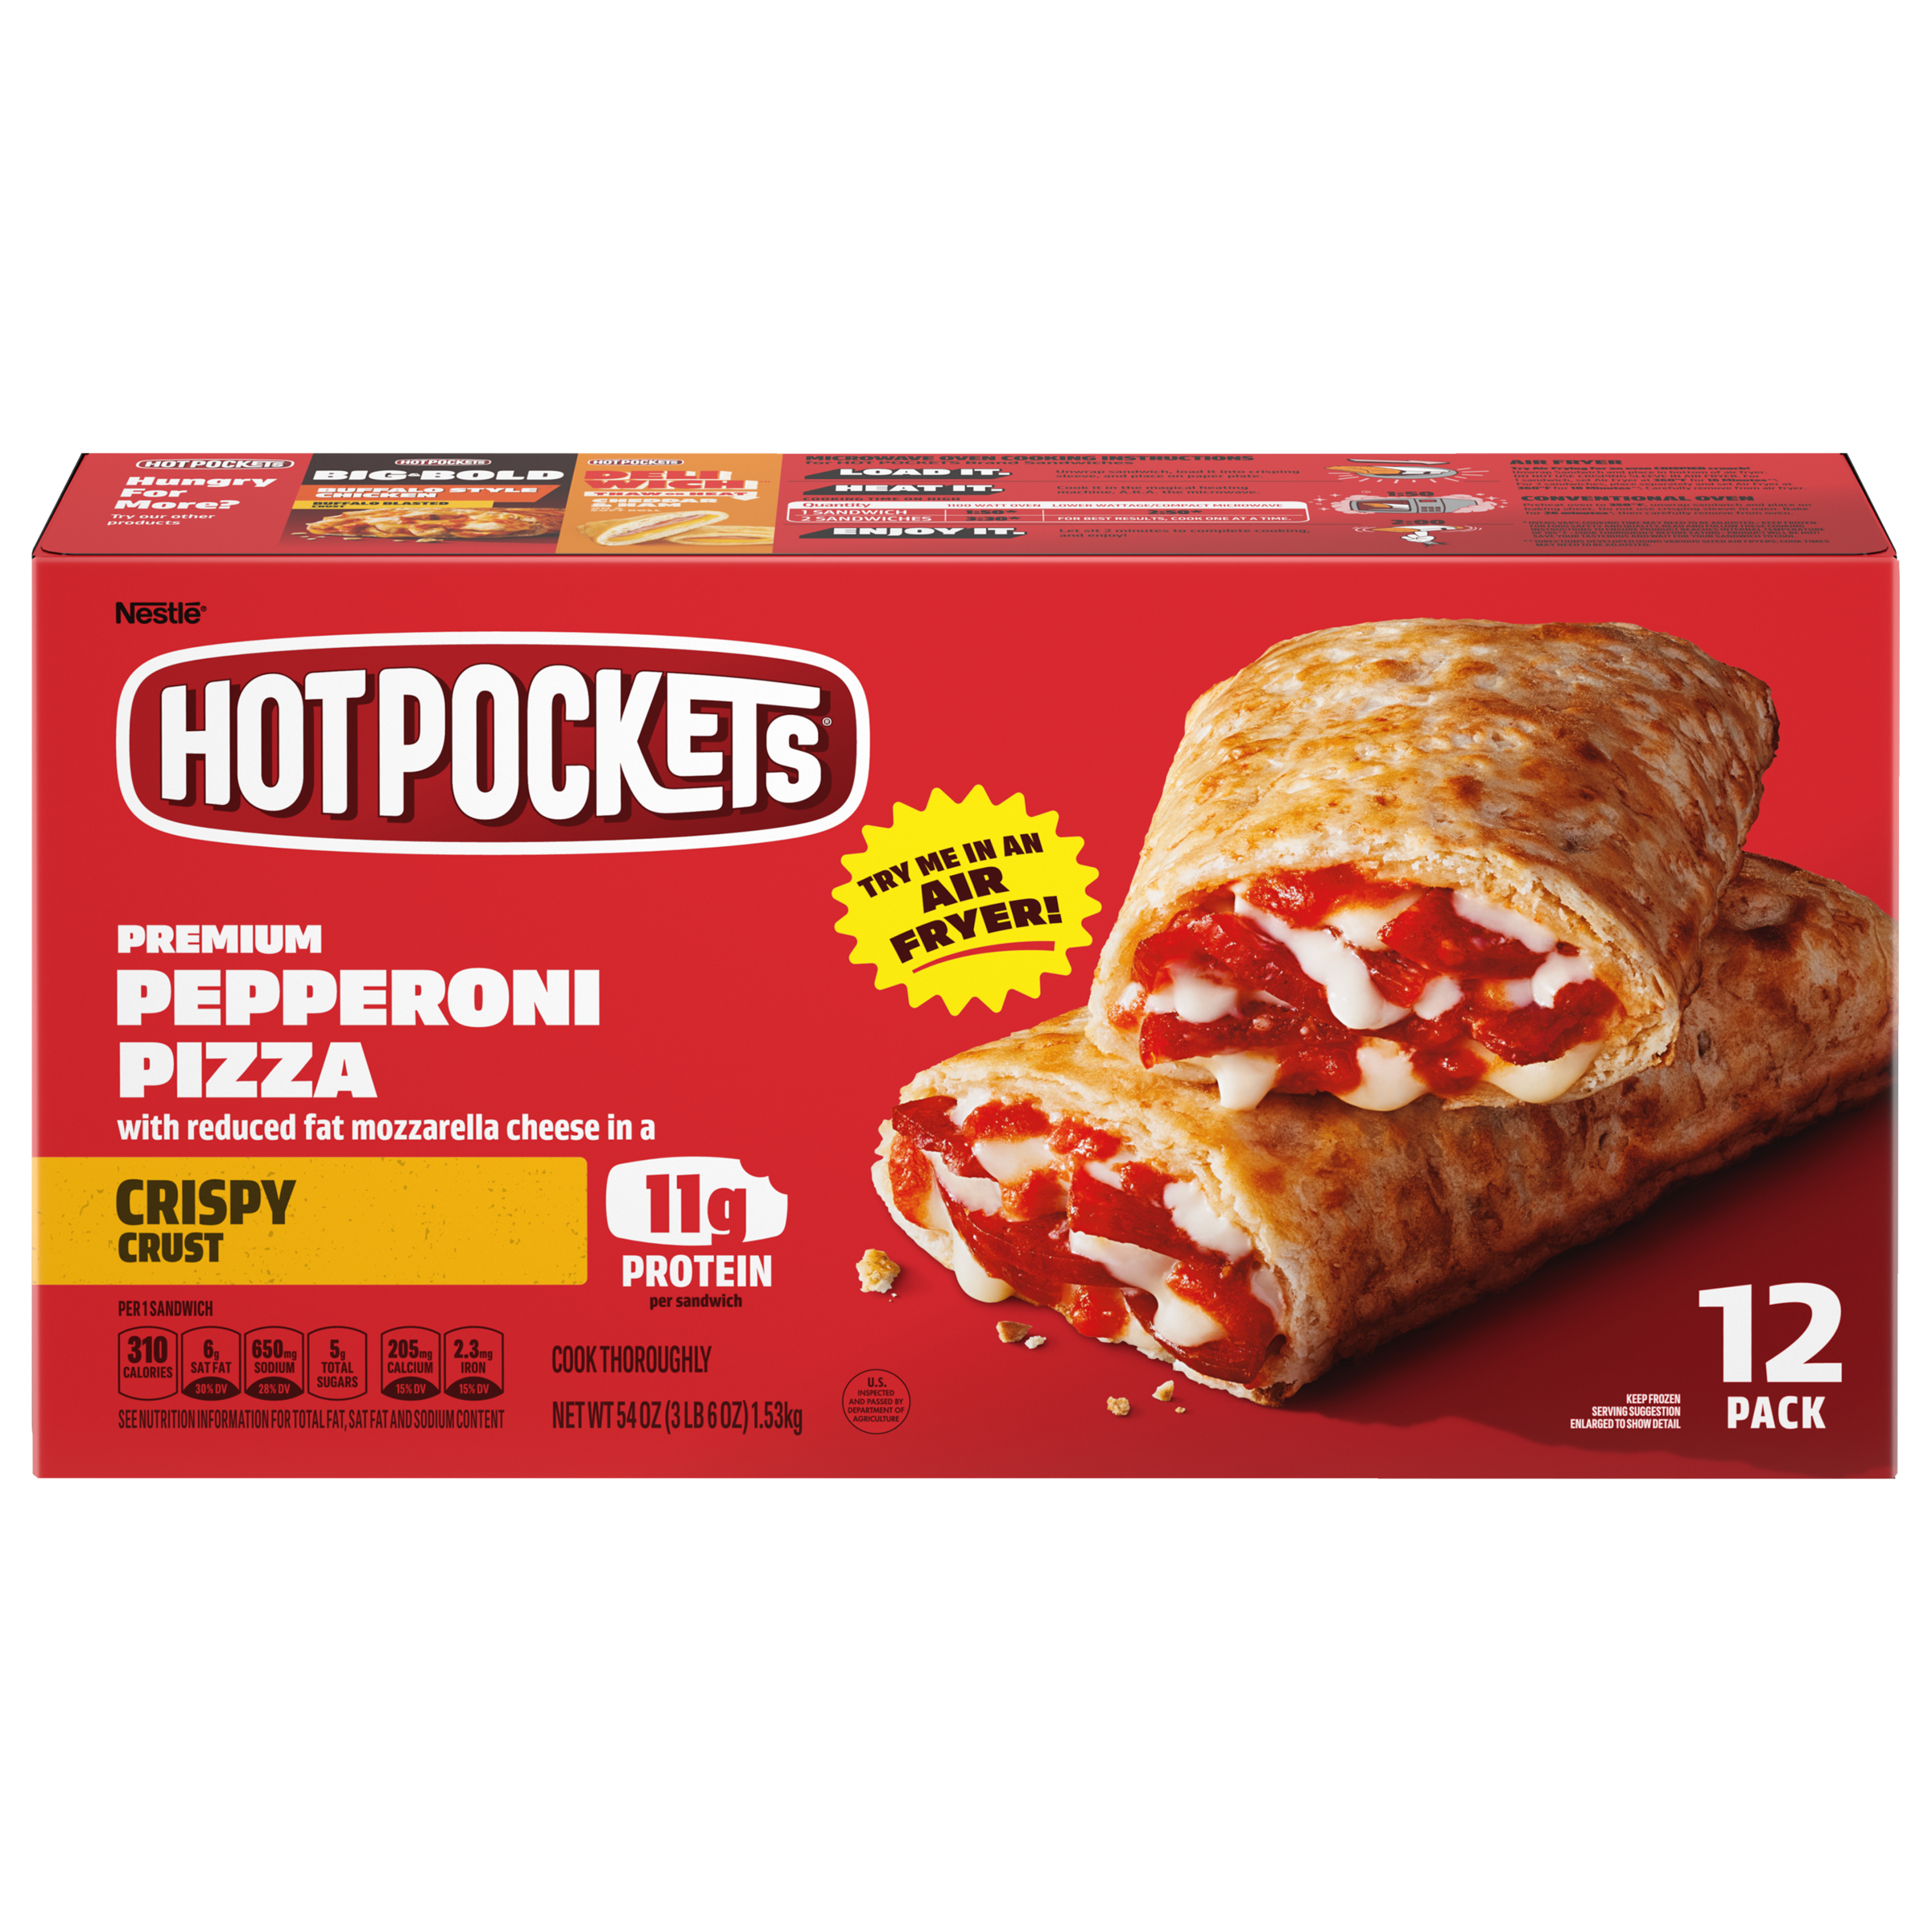 HOT POCKETS Crispy Crust Premium Pepperoni Pizza (12 Pack) 4 units per case 54.0 oz